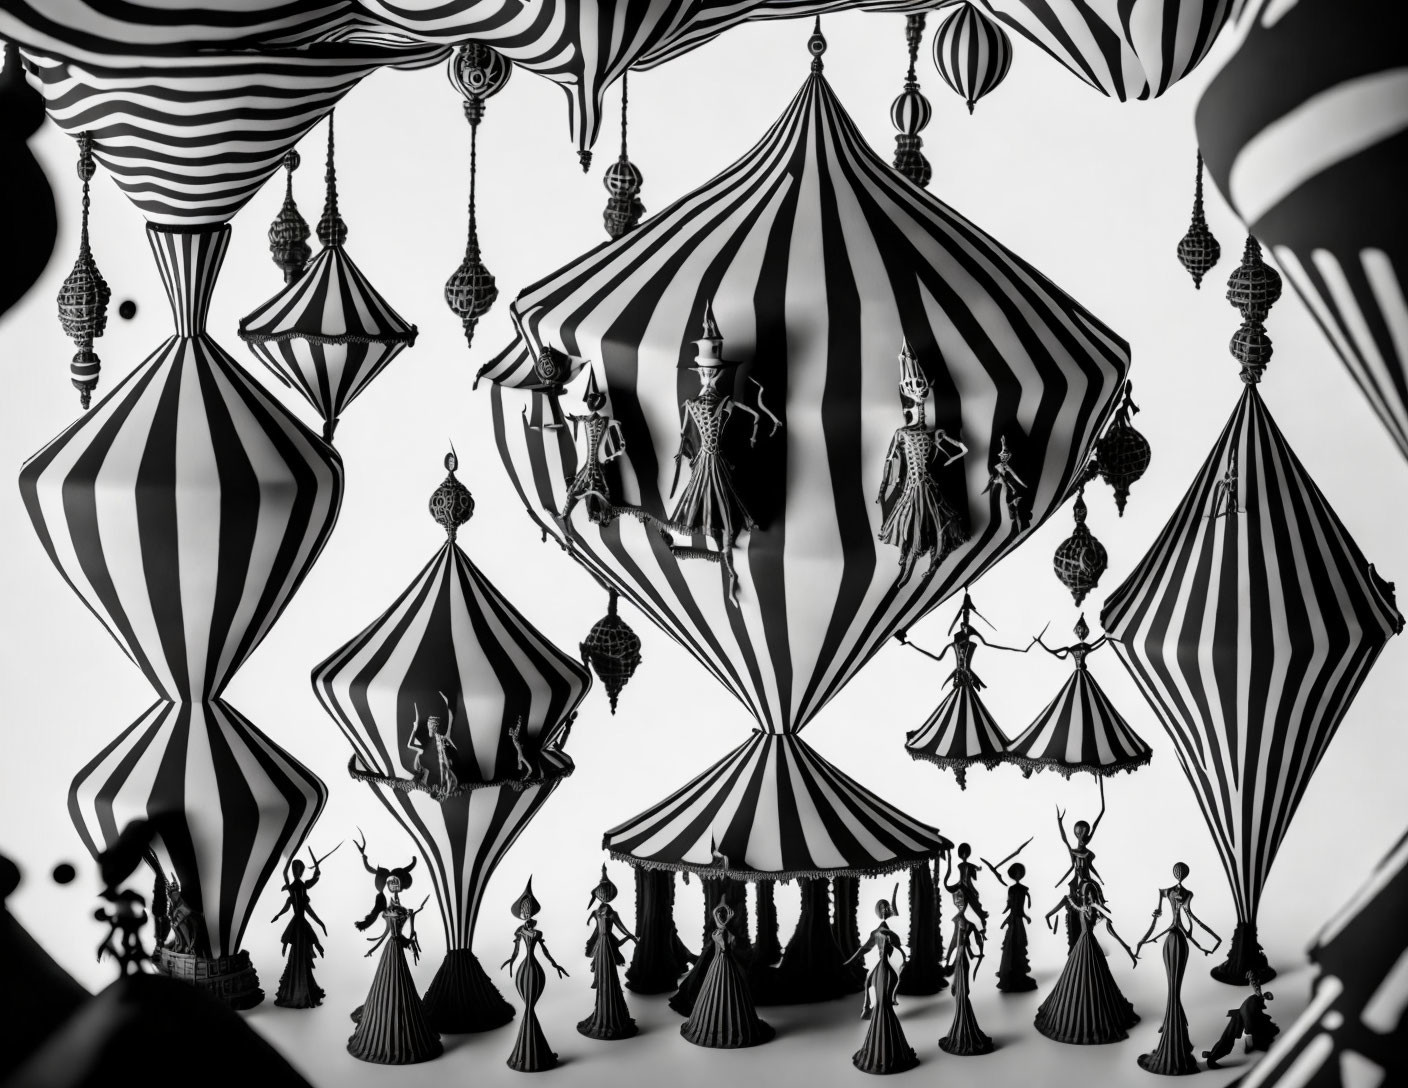 Whimsical monochrome circus tent and acrobat display